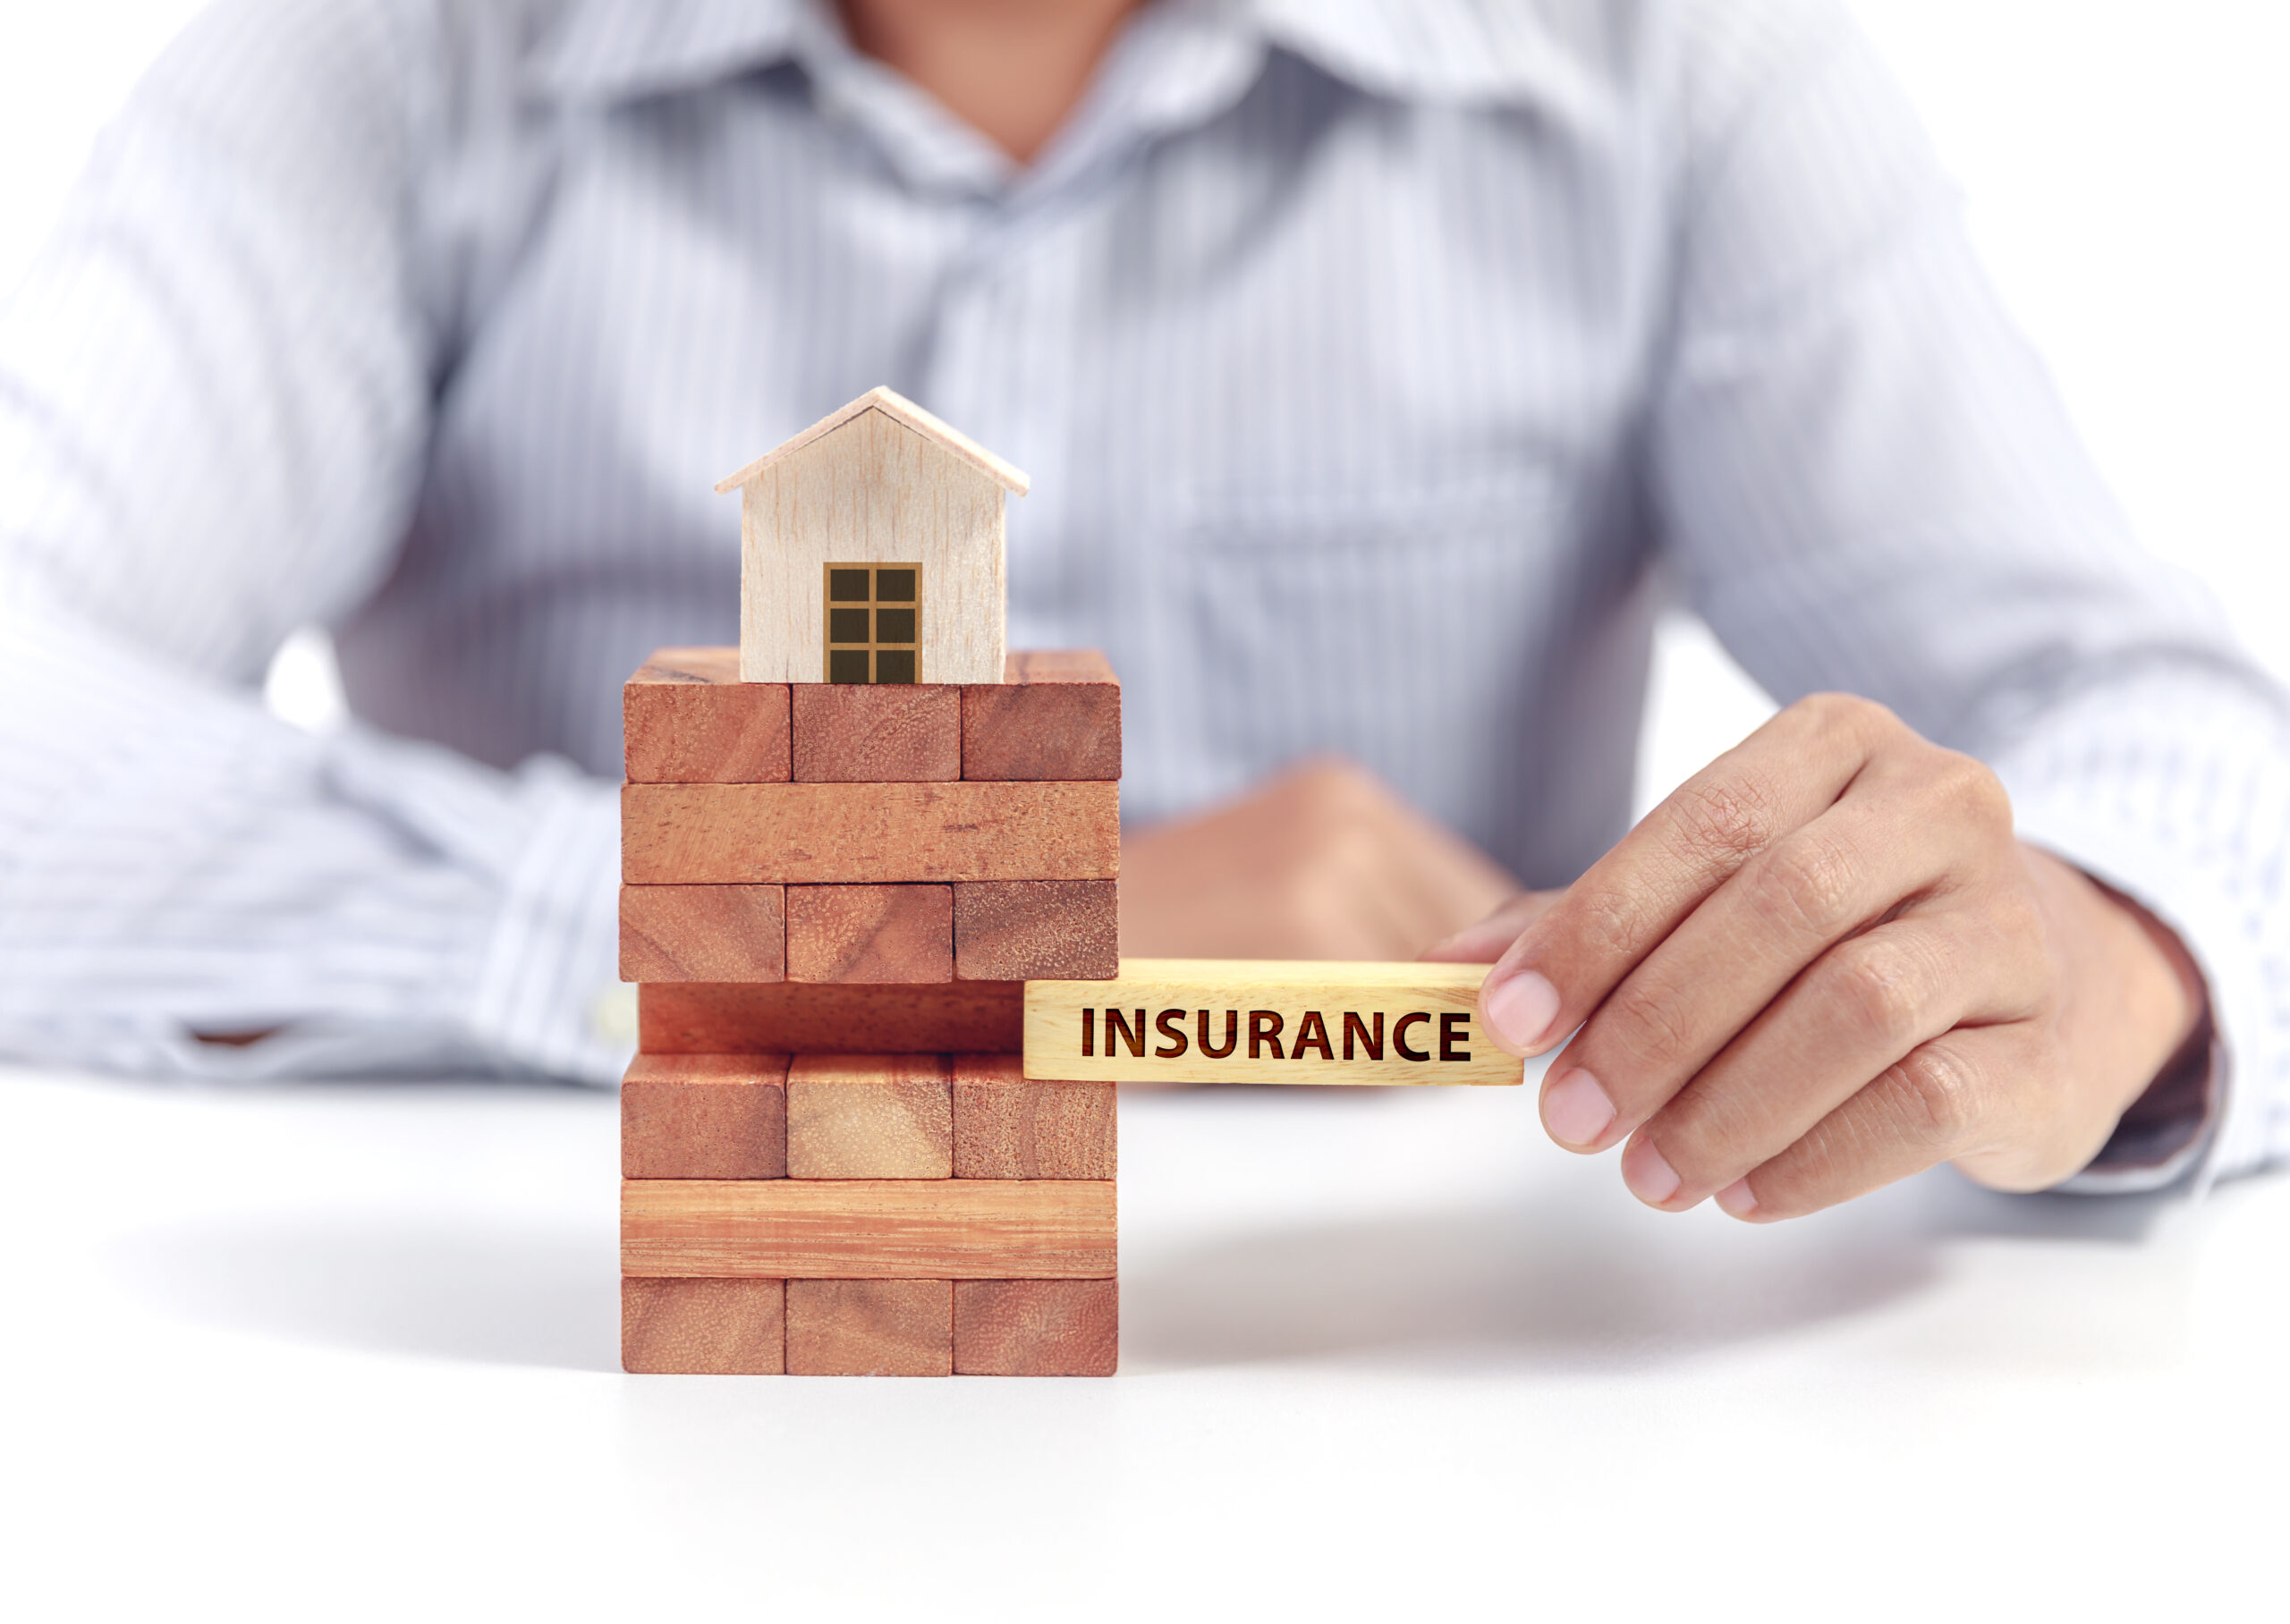 Home Insurance Barfield Financial Advisors